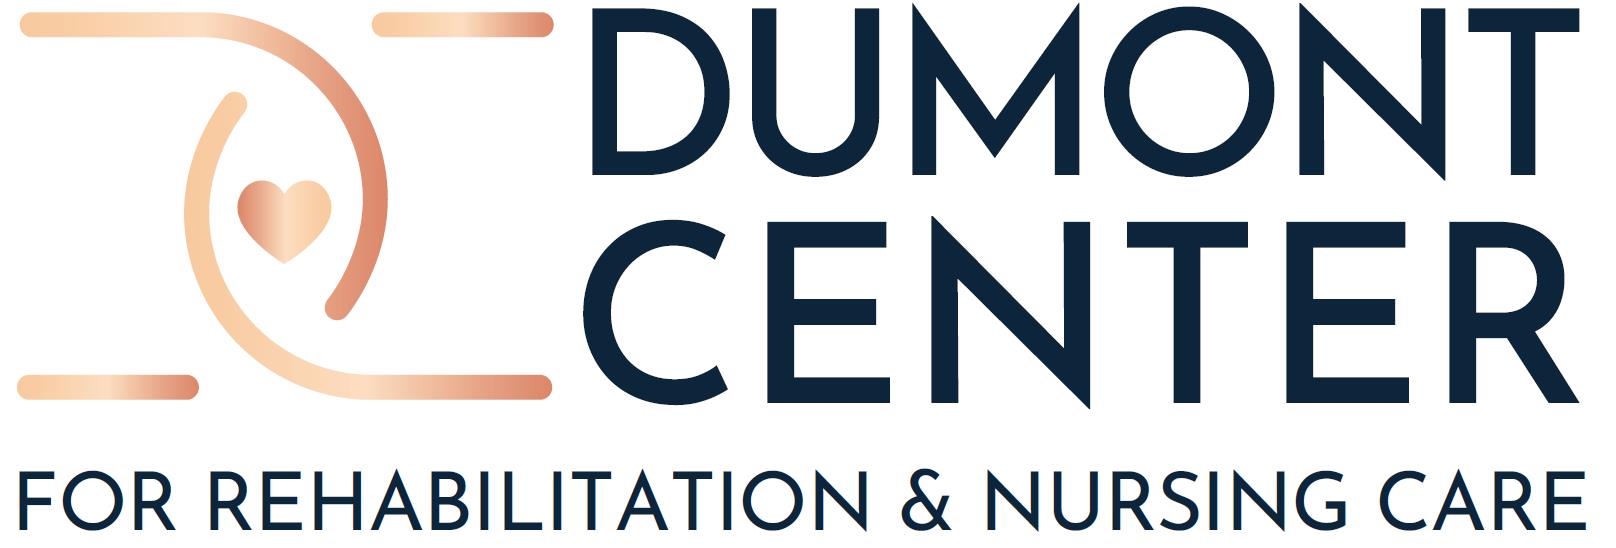 dumontcenter Logo